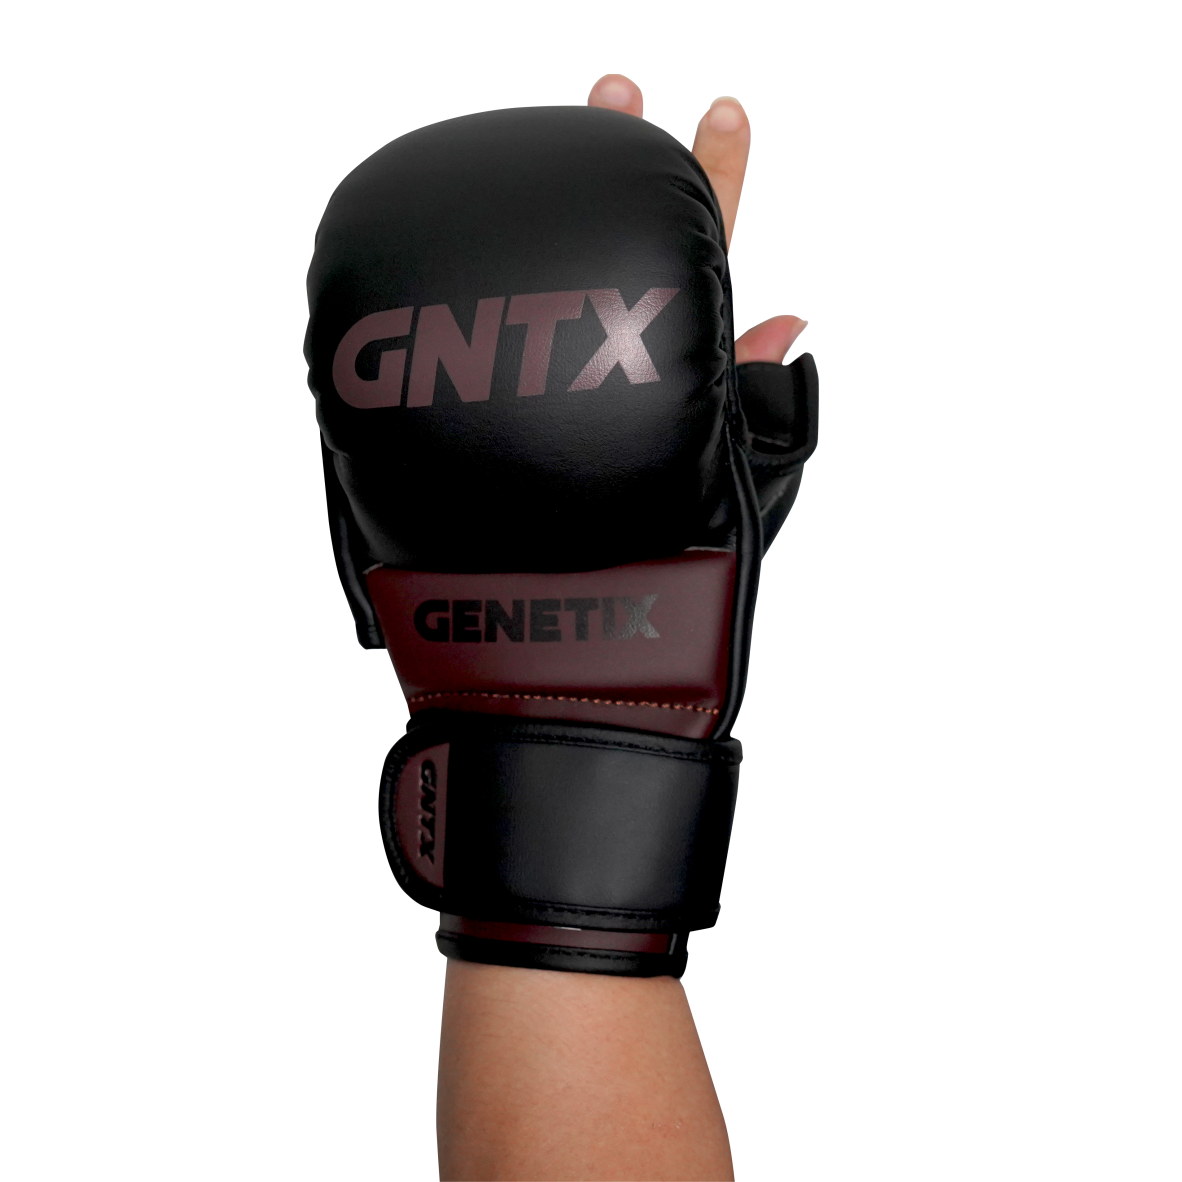 GENETIX COMBAT GNTX SPARRING MMA GLOVES MG5 BlackBrown